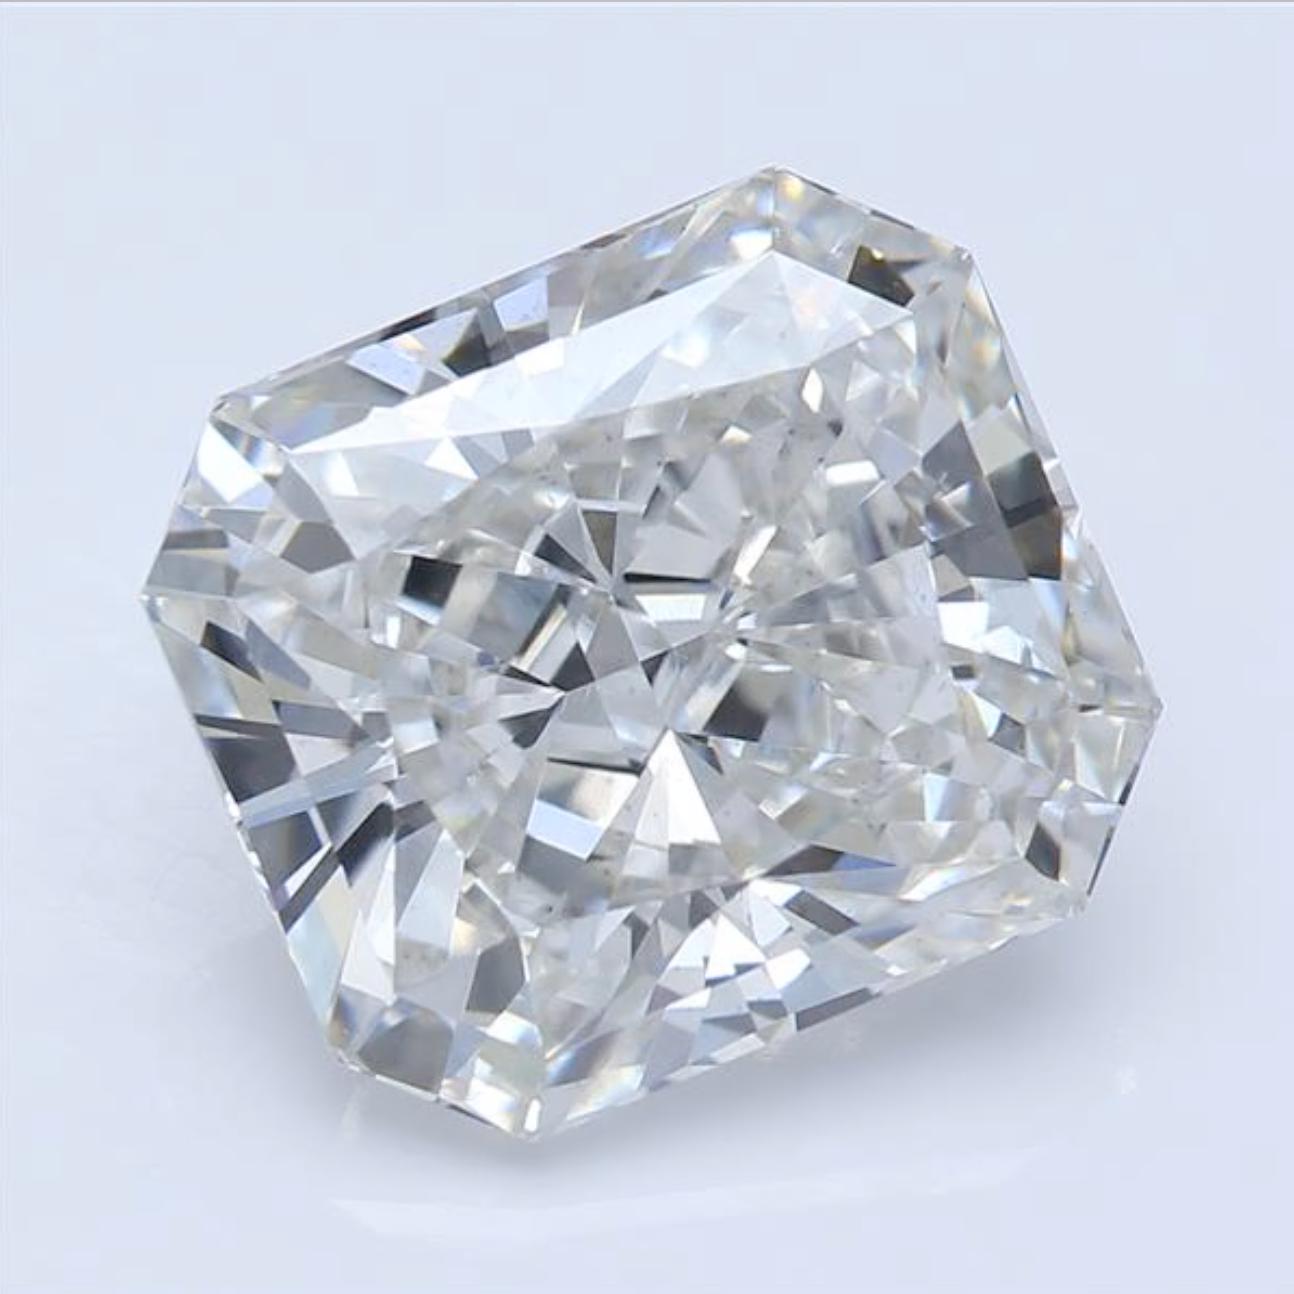 4.08 Carat, Radiant Cut, H Color, VS2 Clarity, Lab Grown Loose Diamond CVD | IGI Certified